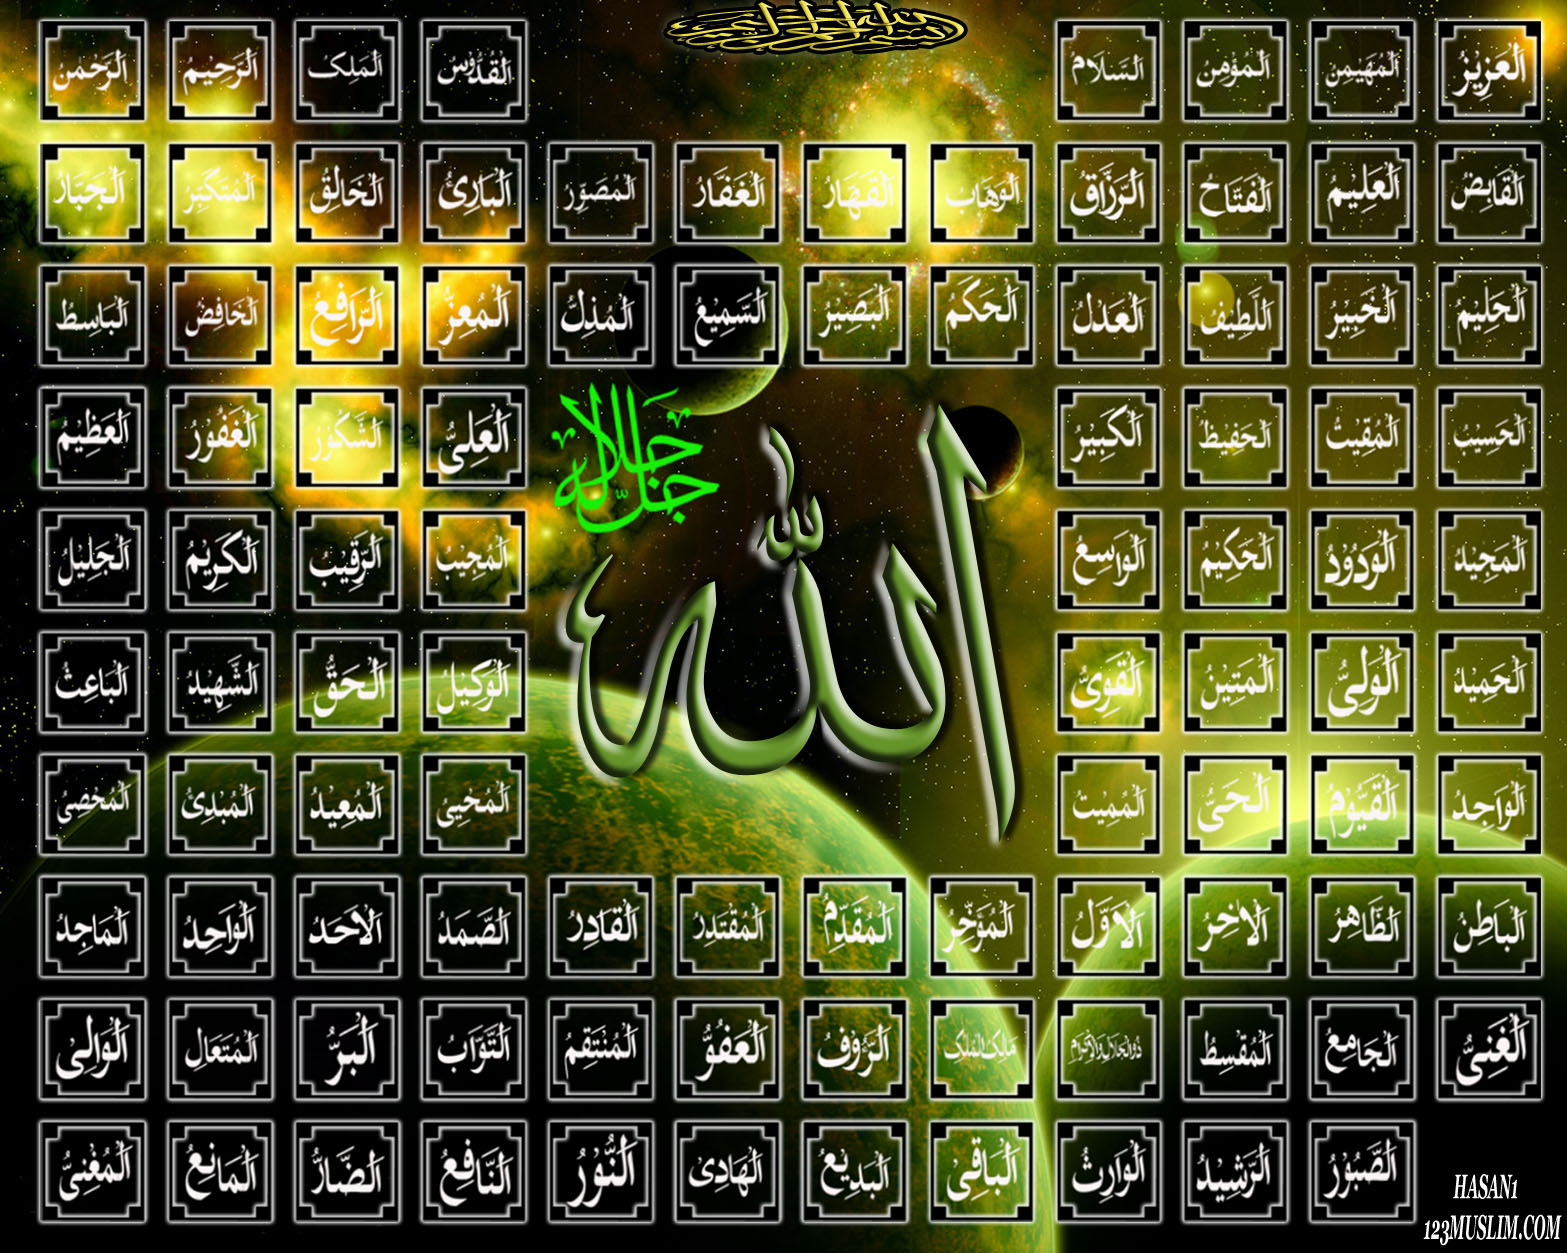 Computer Wallpaper: Allah Names 99 Names of Allah the Name of Allah download 99 Allah Names